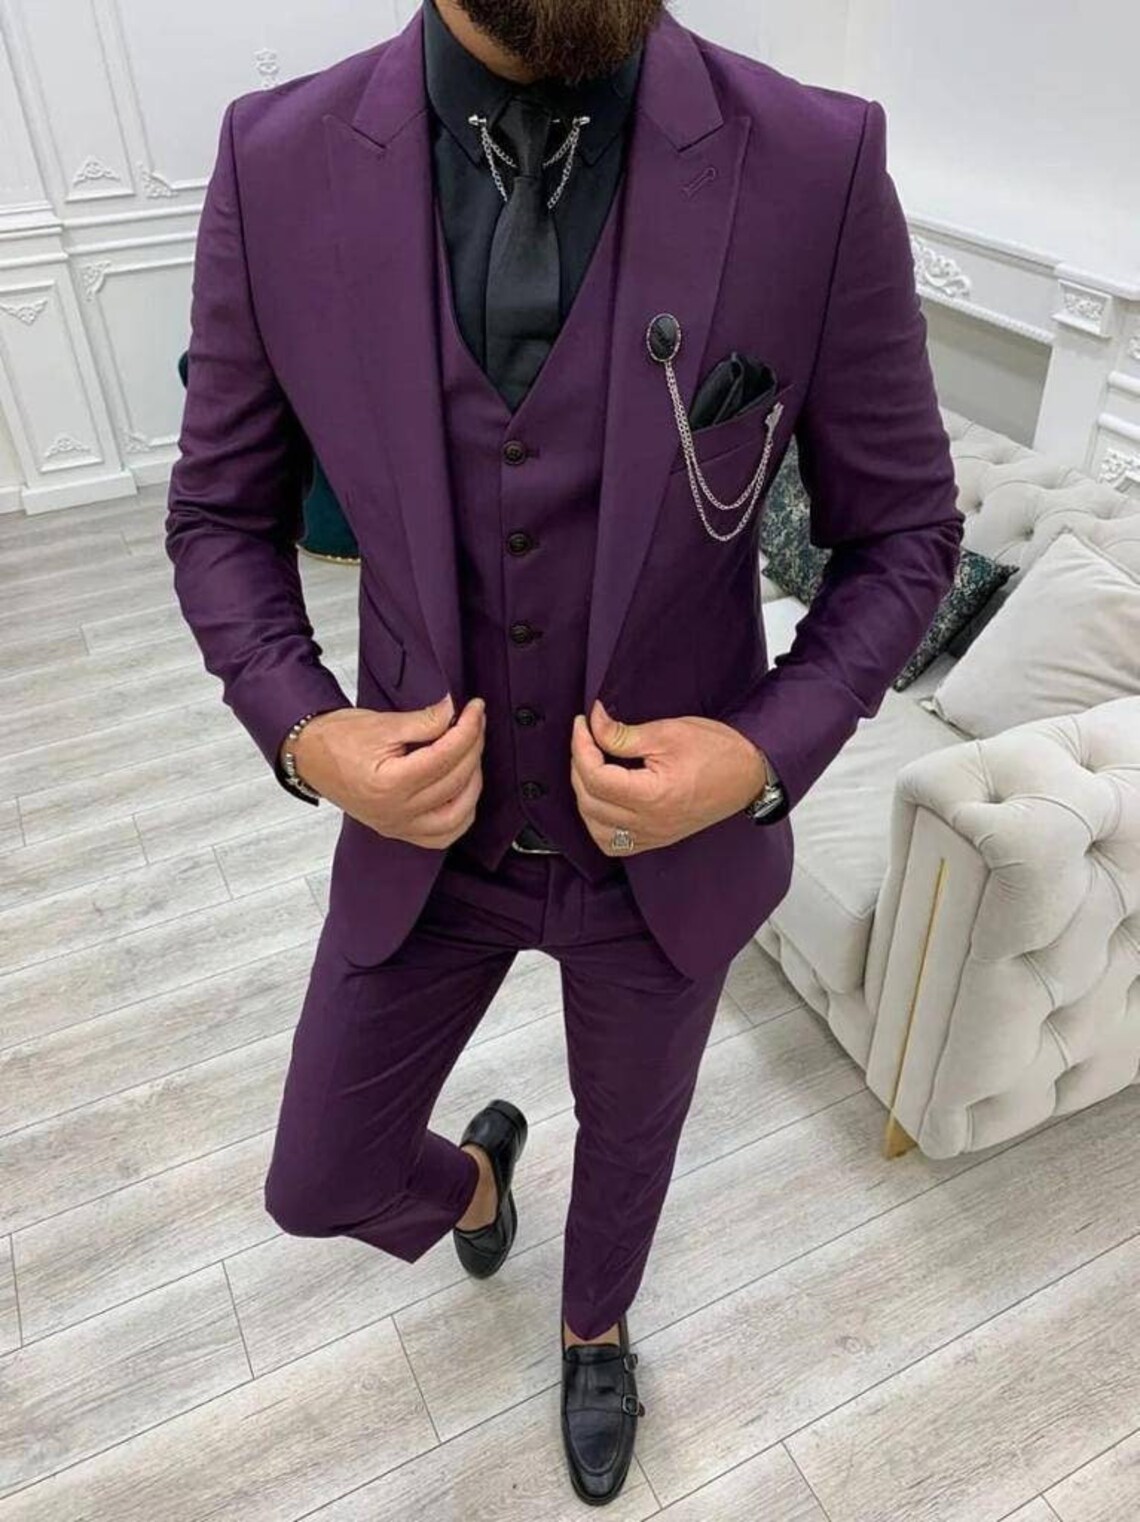 Purple Three Piece Suit Tuxedo Wedding Suits for Men - Etsy